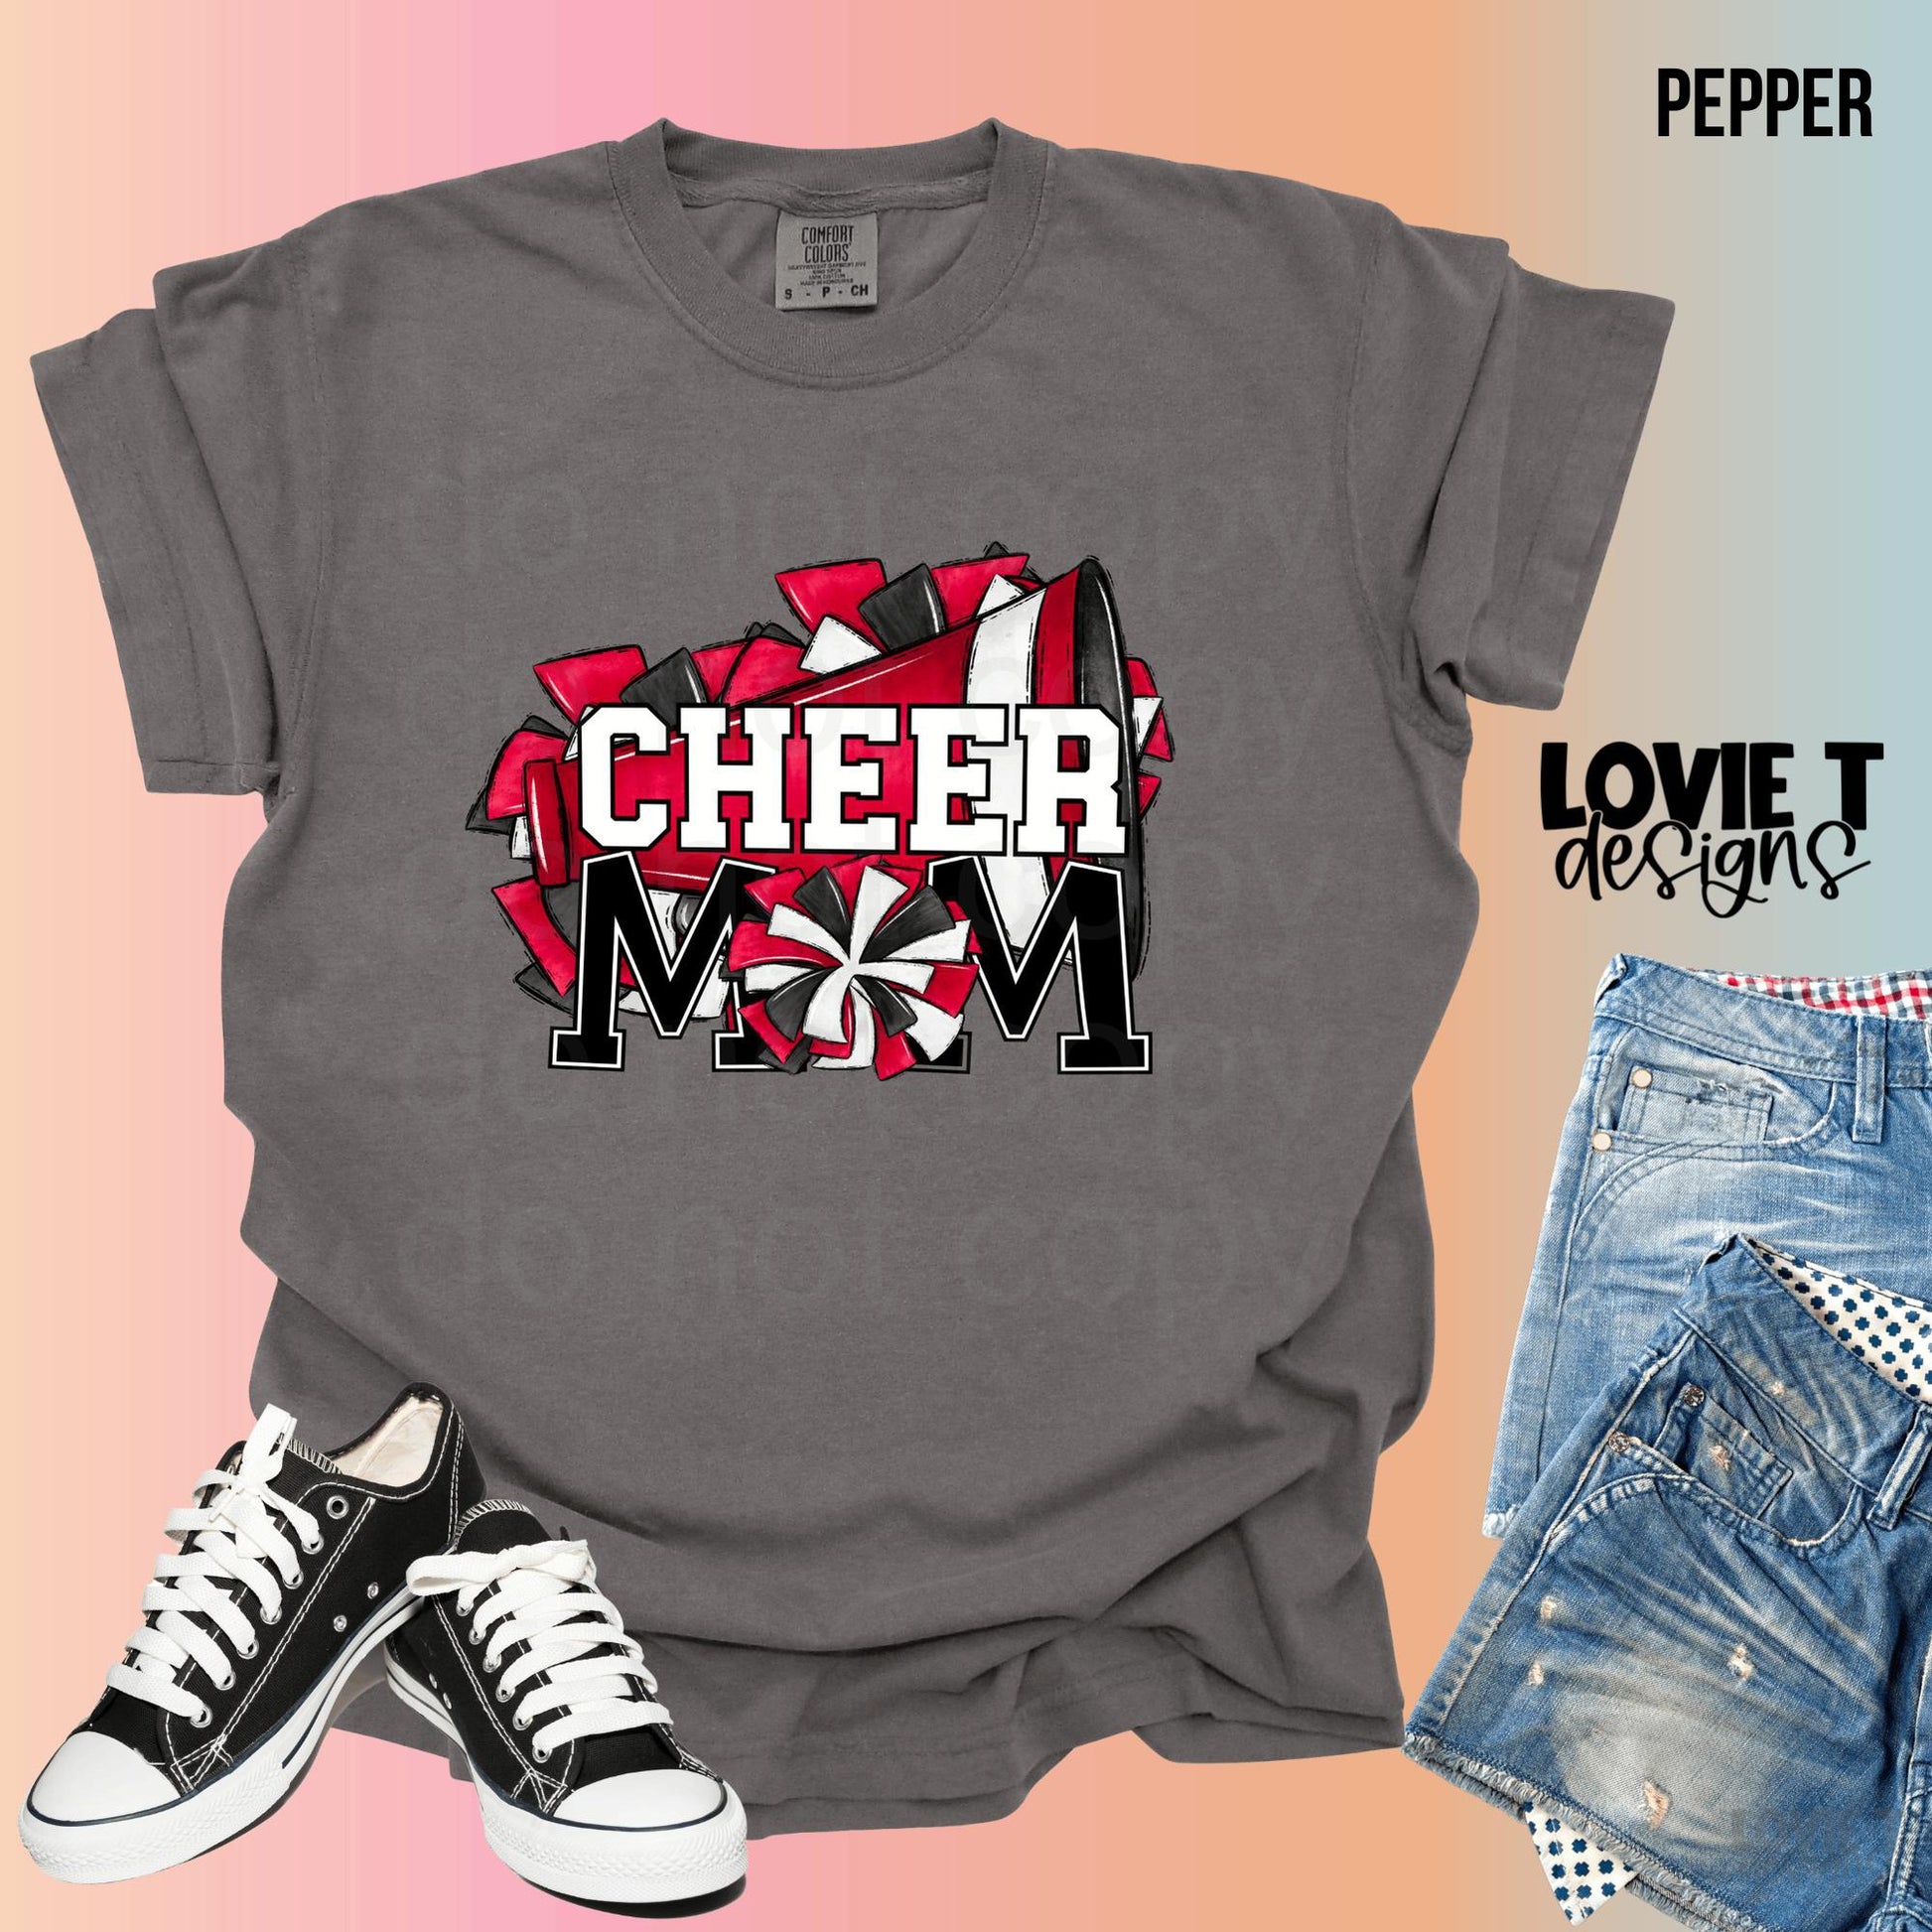 Cheer_Mom_Red-Lovie T Designs